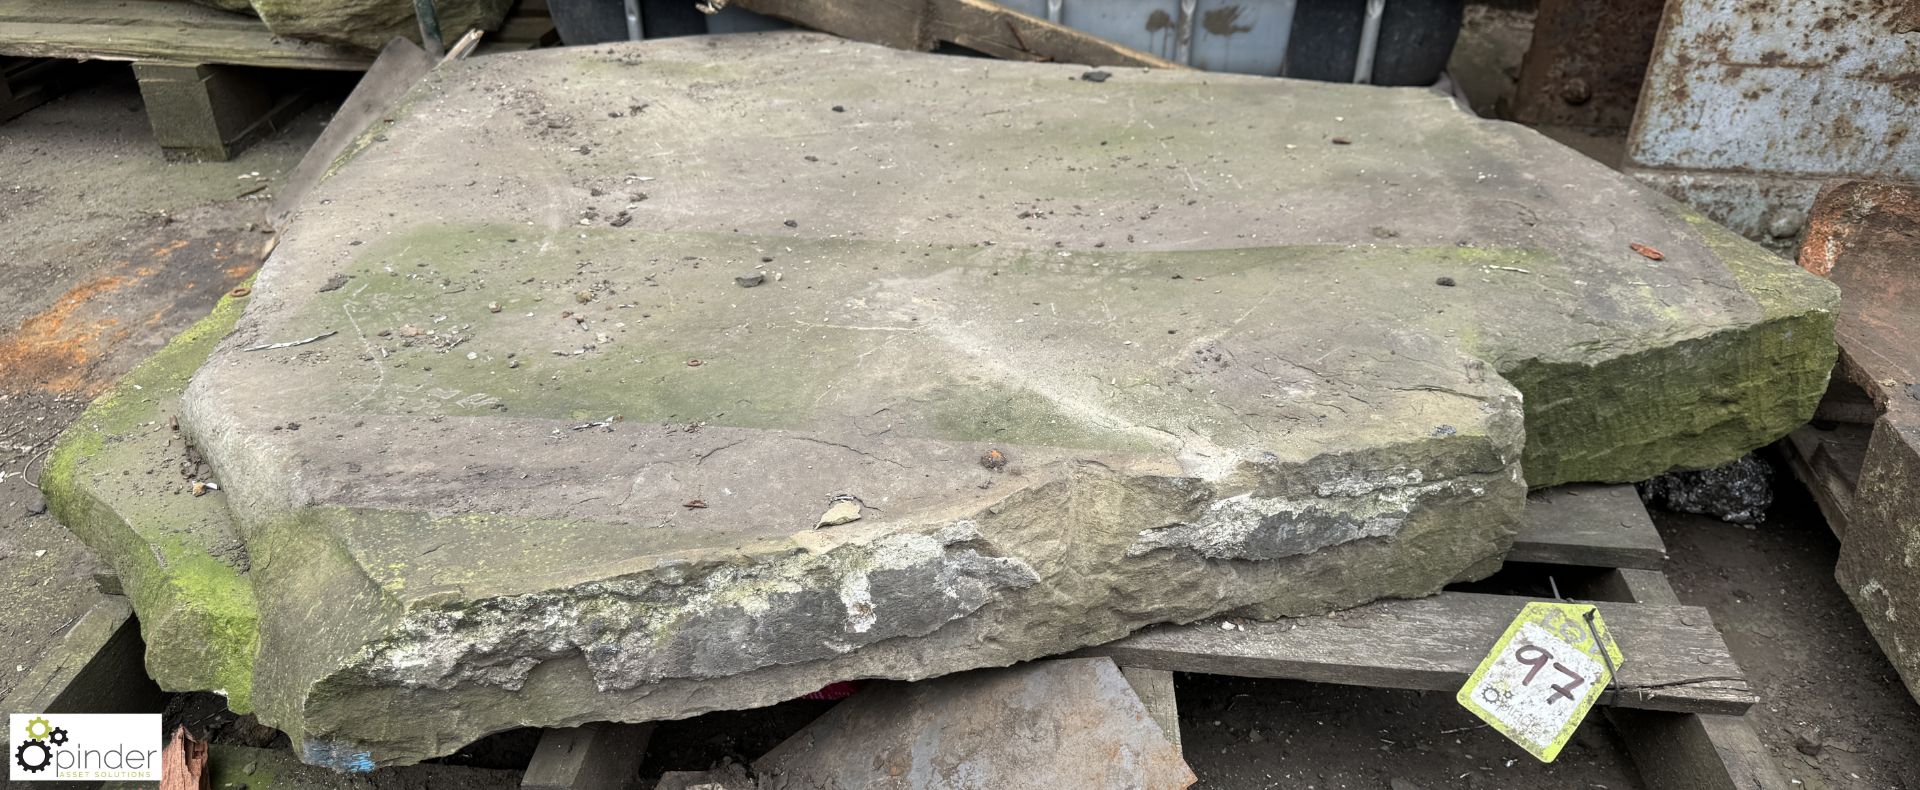 Yorkshire stone Slab, 1250mm x 1050mm x 120mm - Image 2 of 4